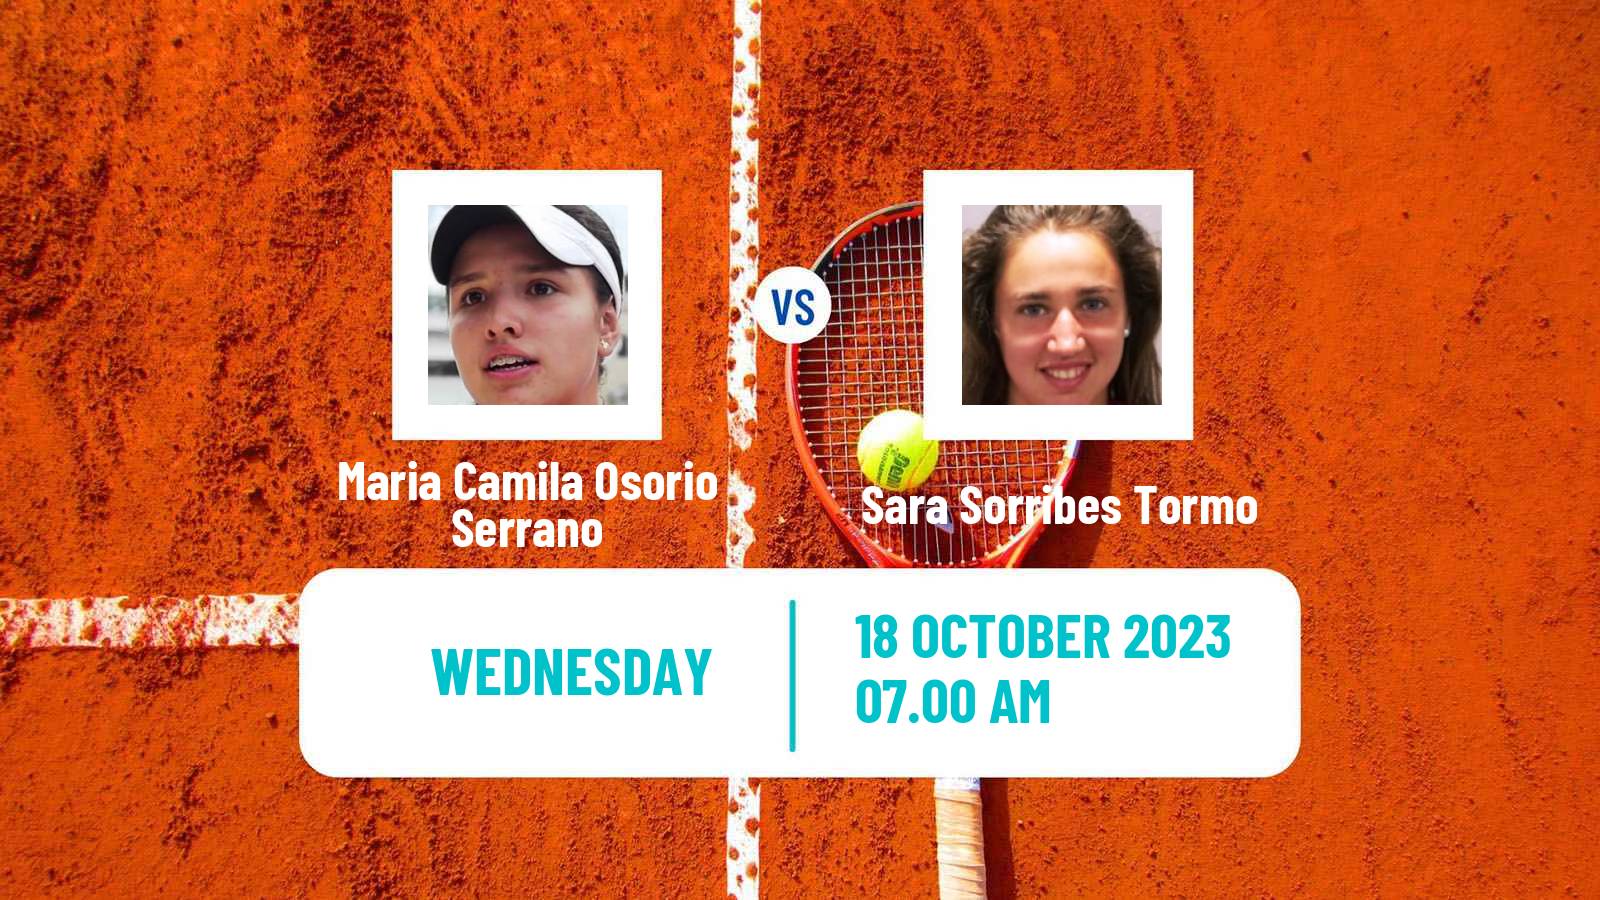 Tennis WTA Nanchang Maria Camila Osorio Serrano - Sara Sorribes Tormo